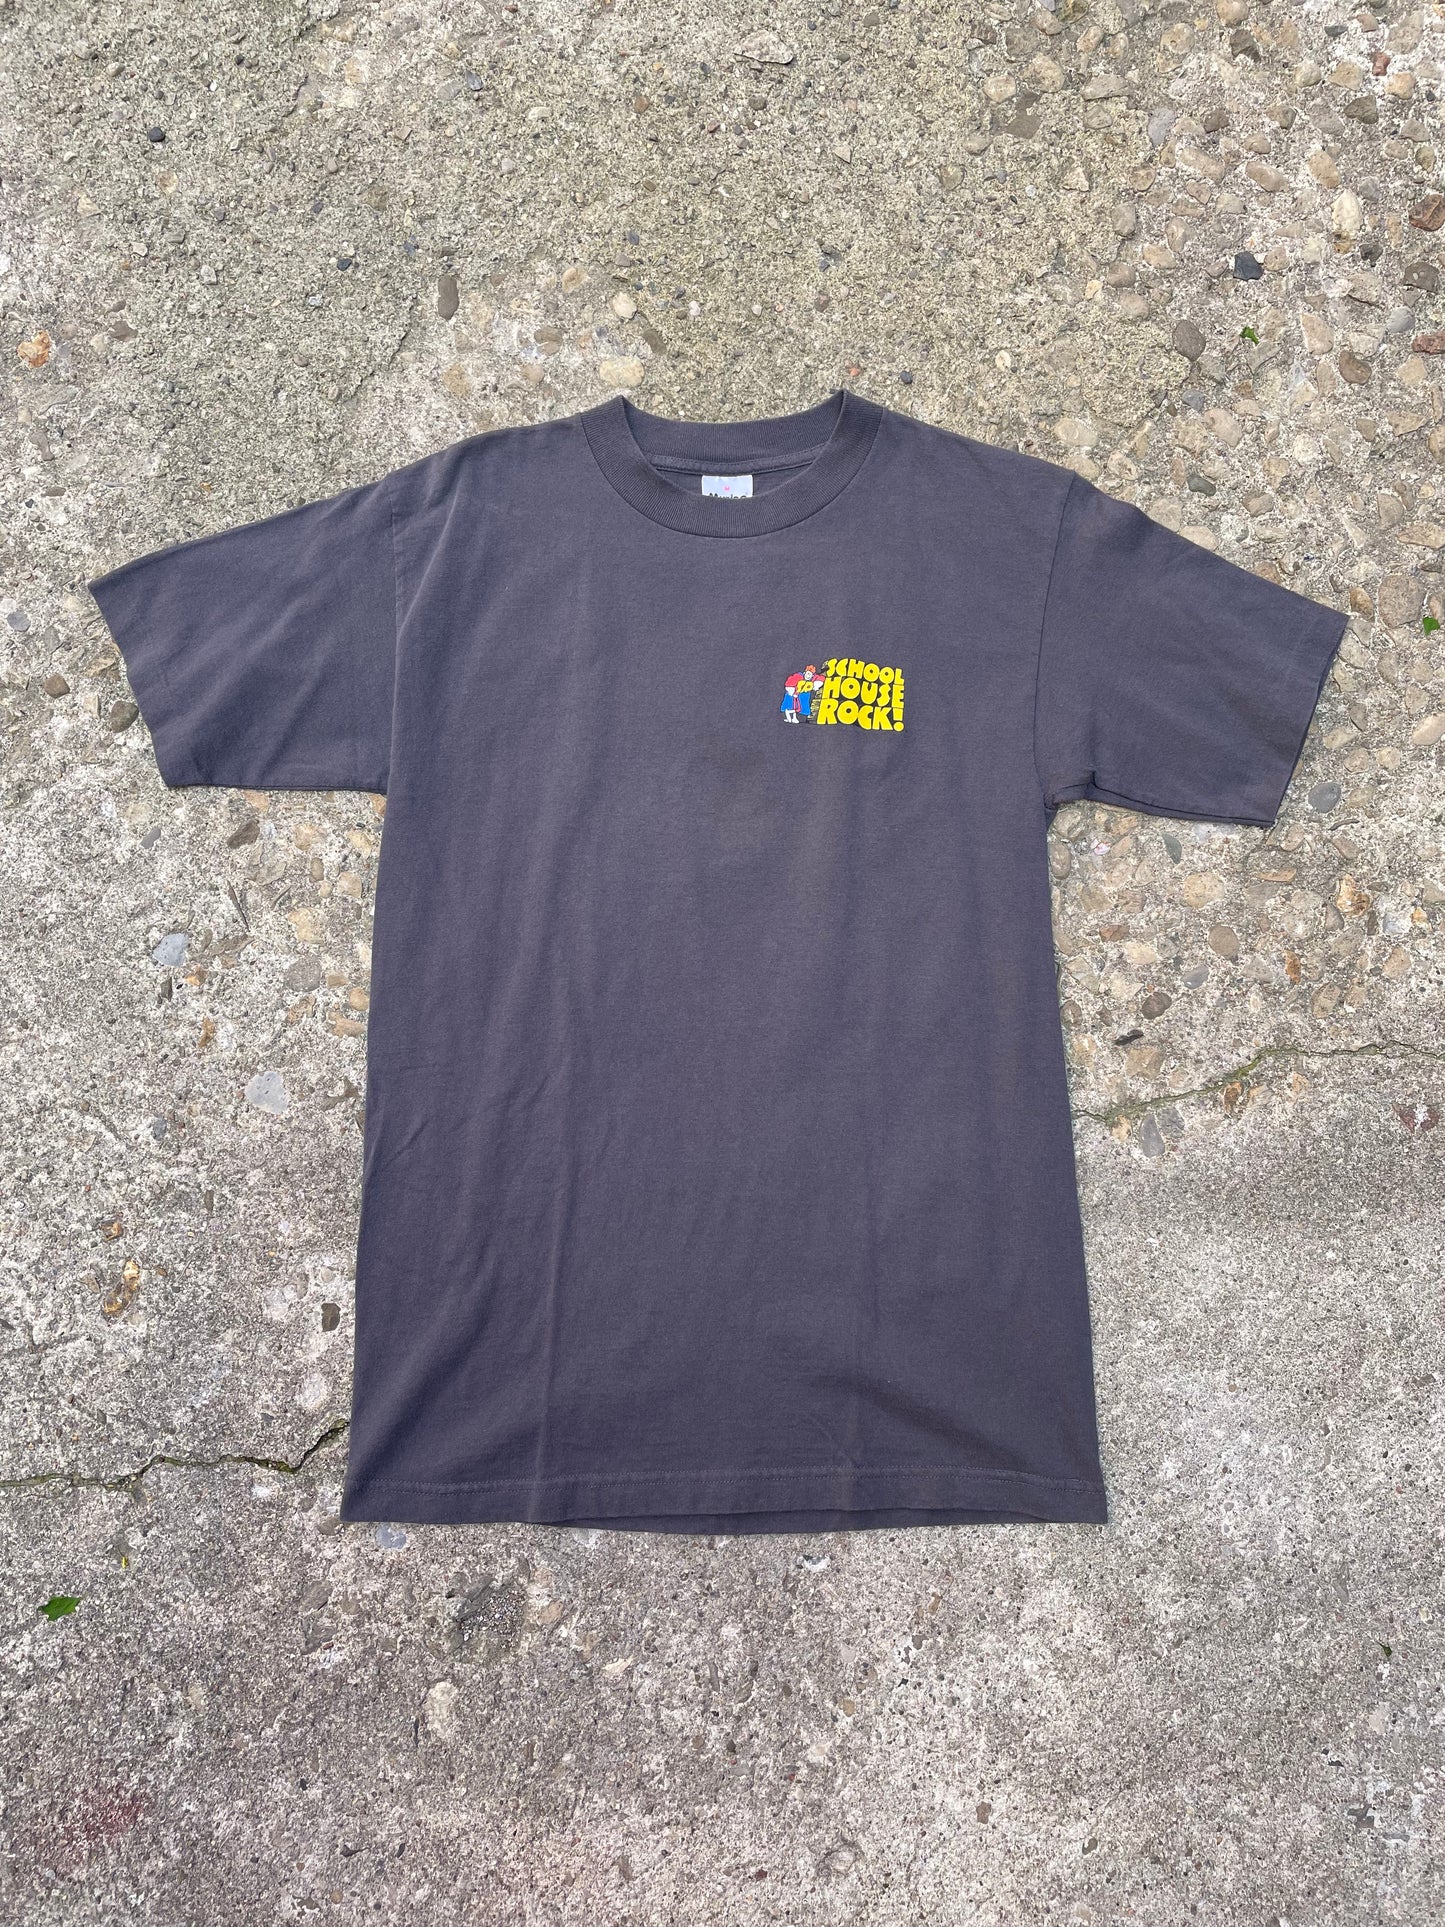 1990's School House Rock 'Conjunction Junction' T-Shirt - M